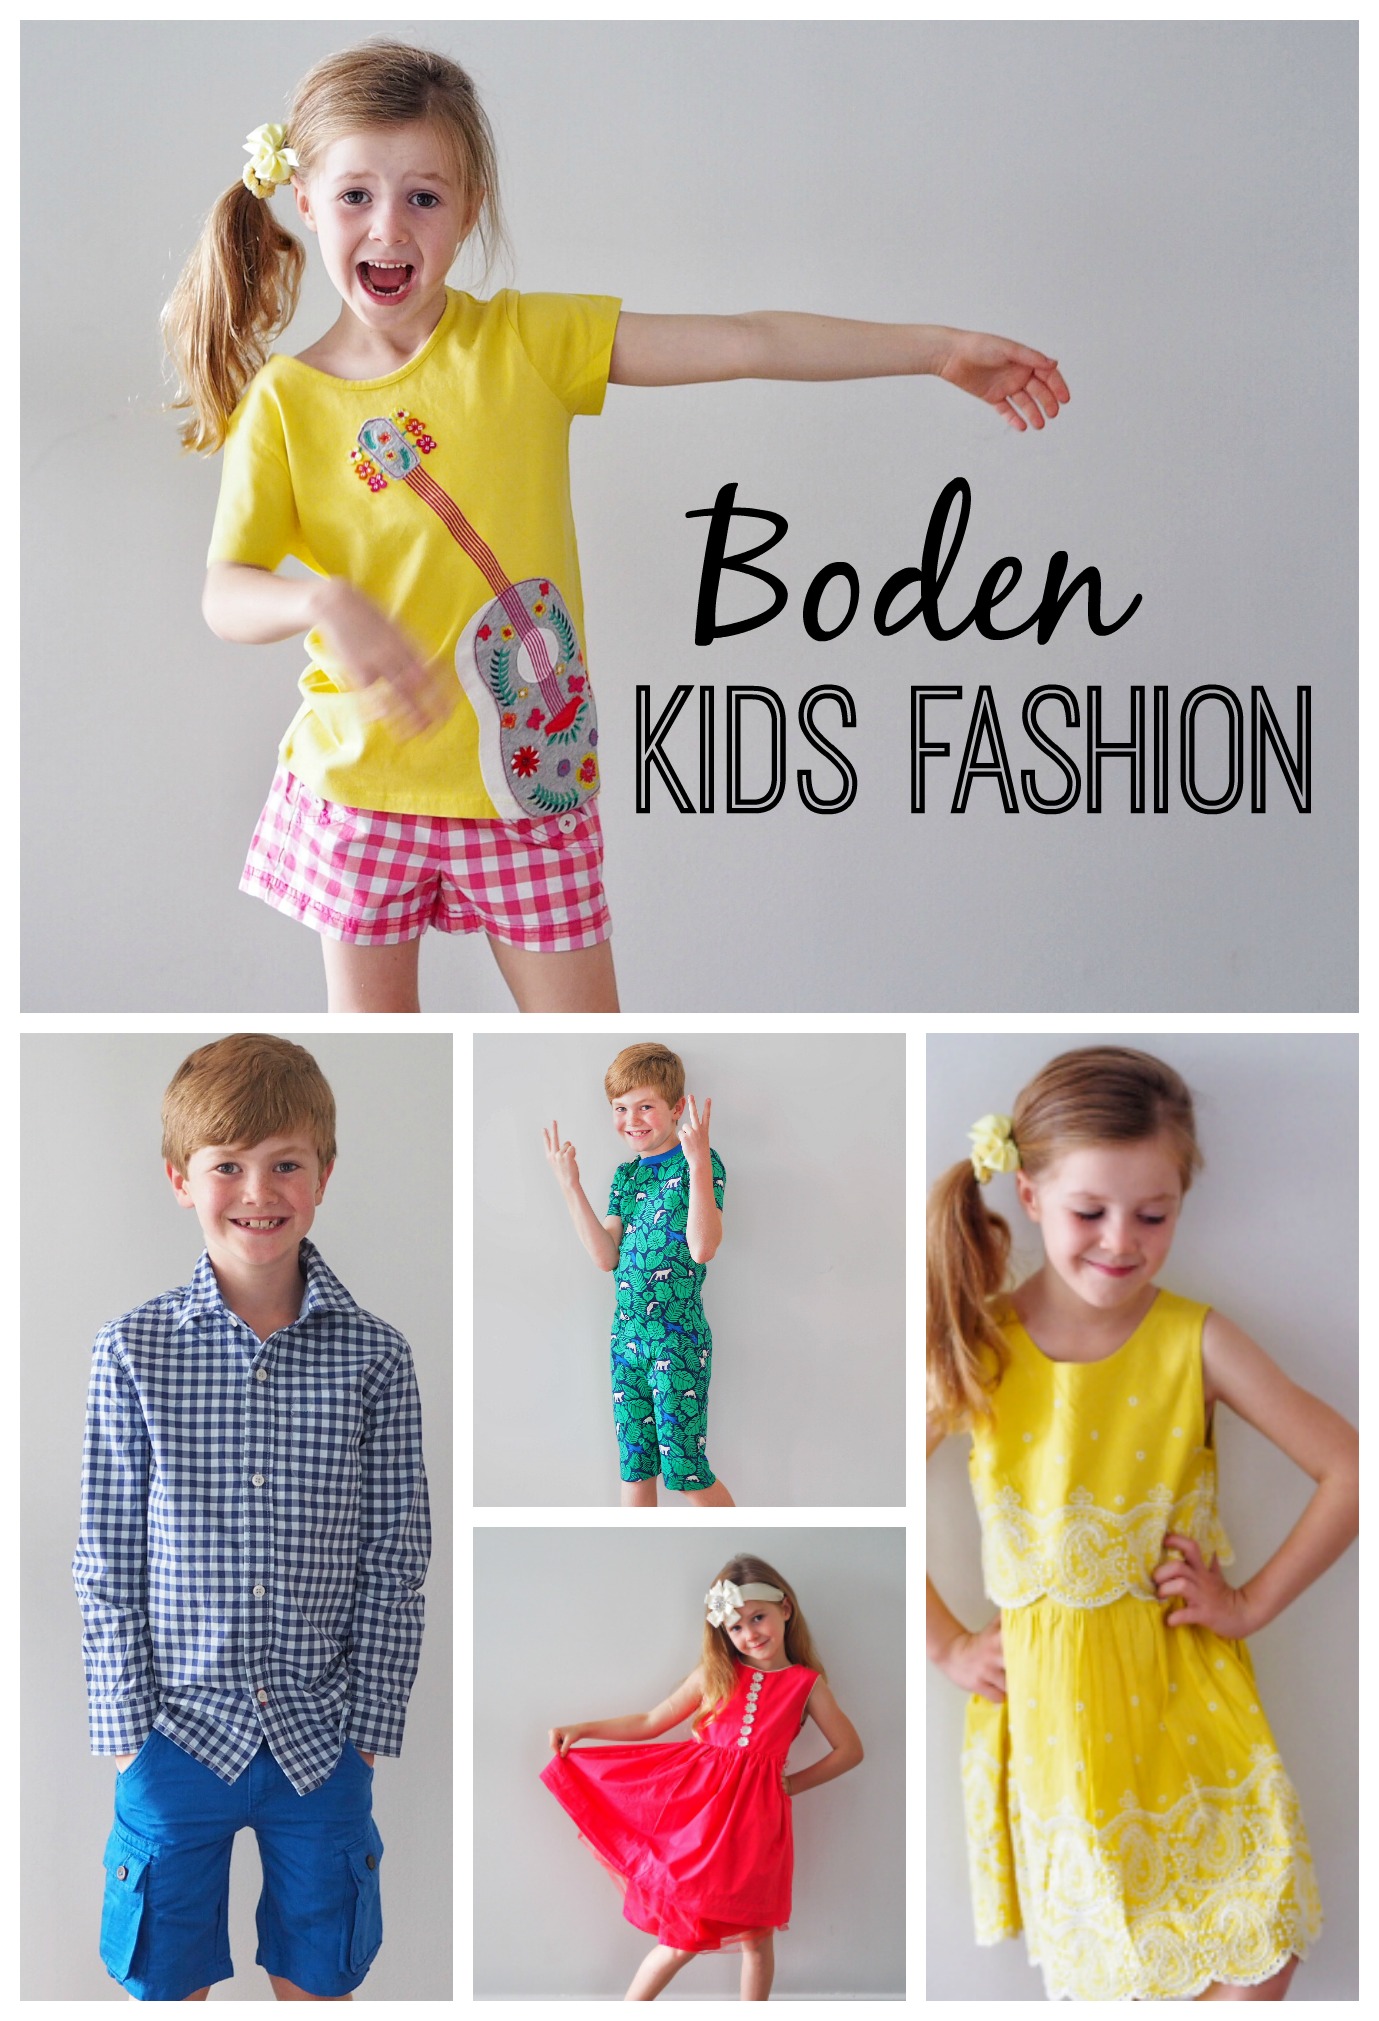 https://pagingfunmums.com/wp-content/uploads/2017/05/Boden-Kids-Fashion.jpg